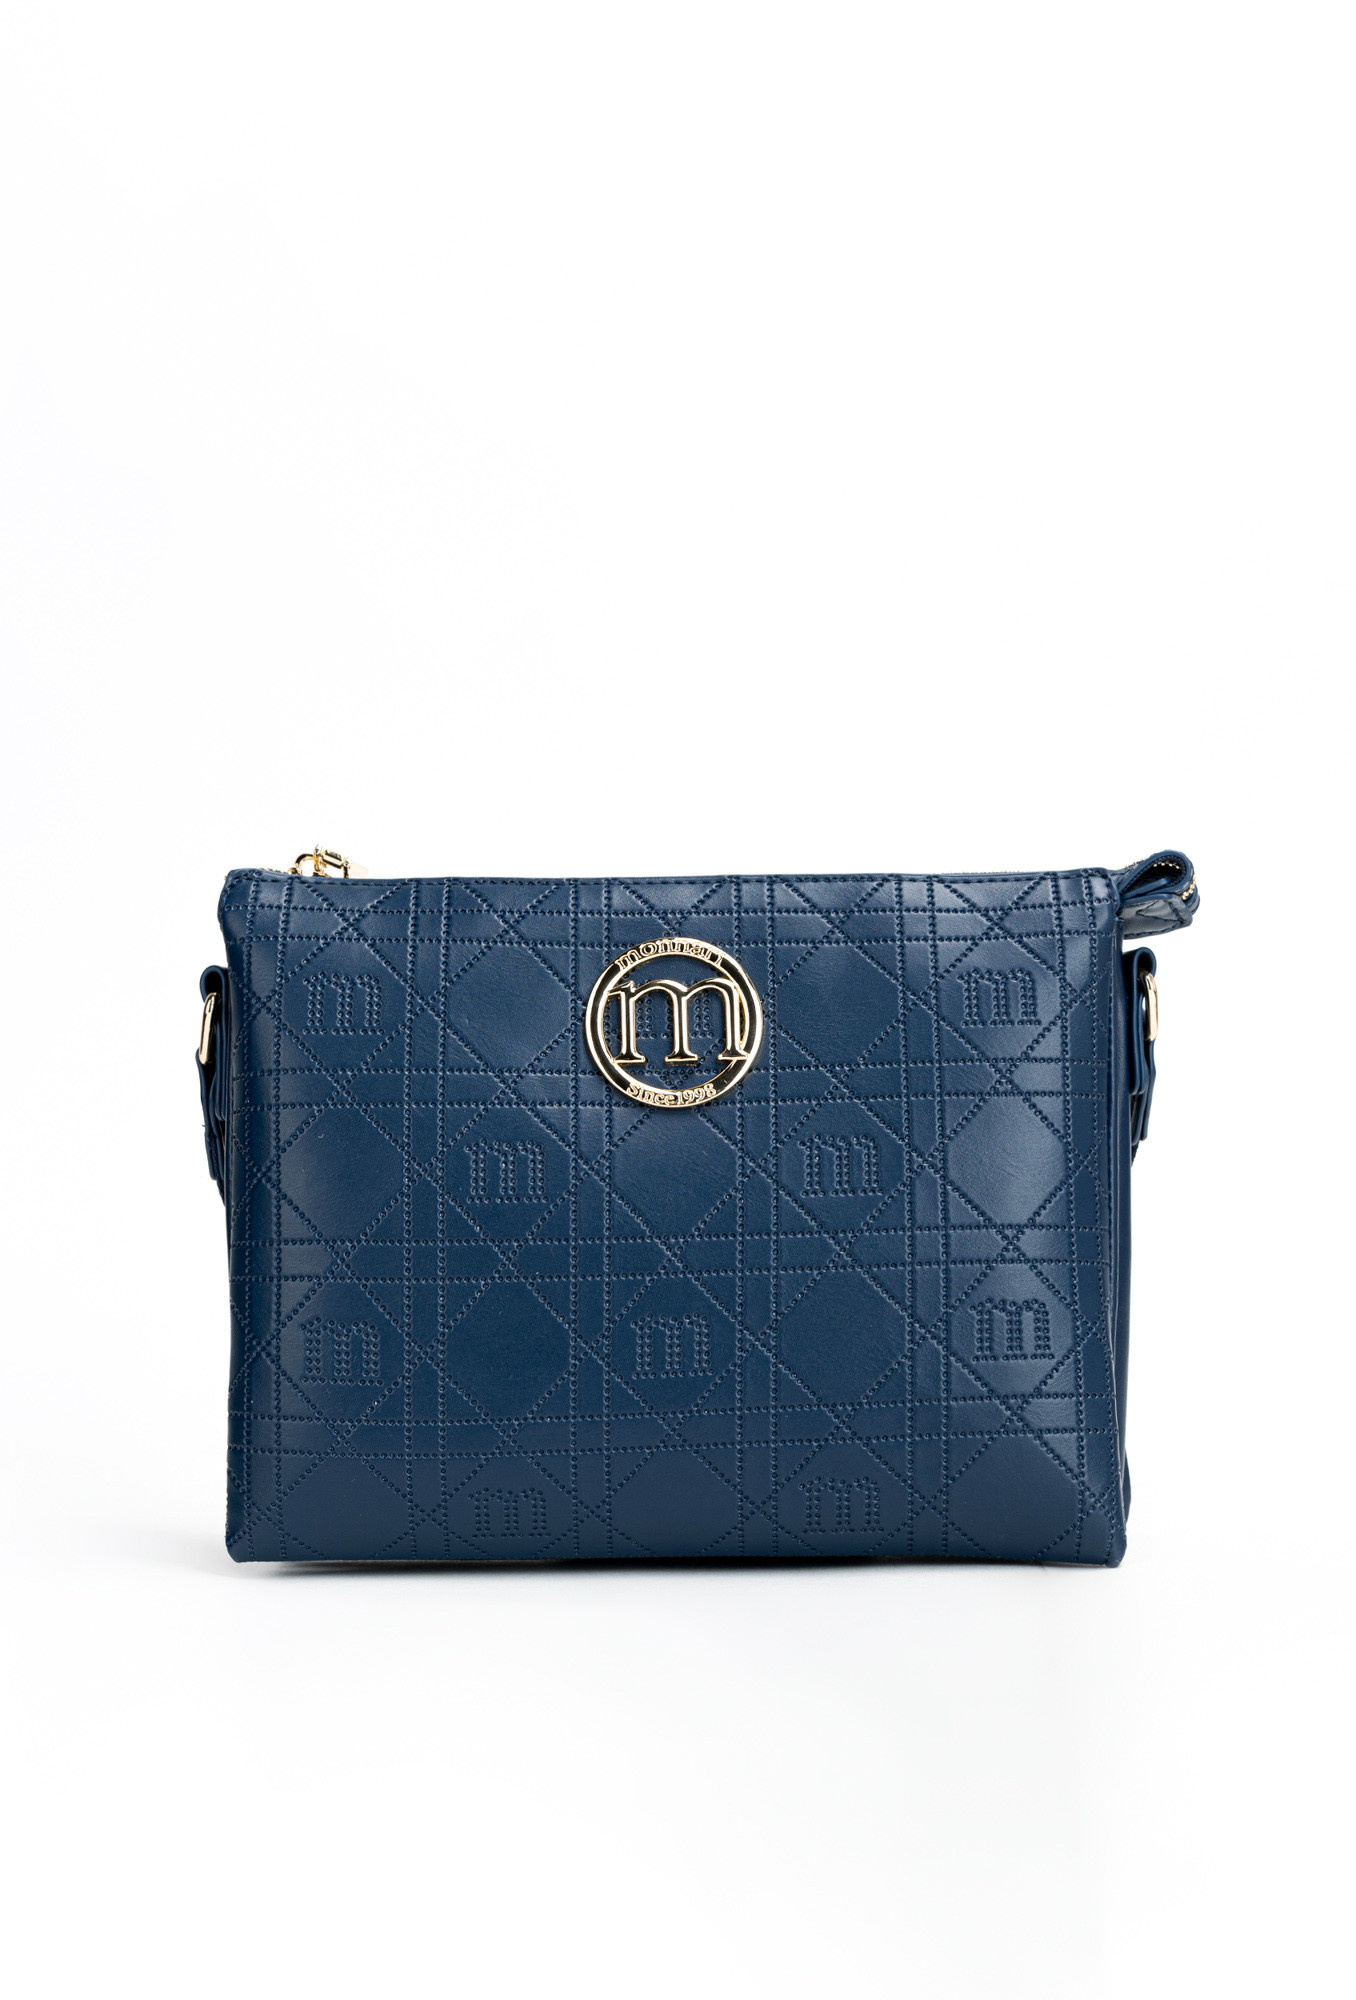 Monnari Bags Dámská kabelka s jemným vzorem Navy Blue OS